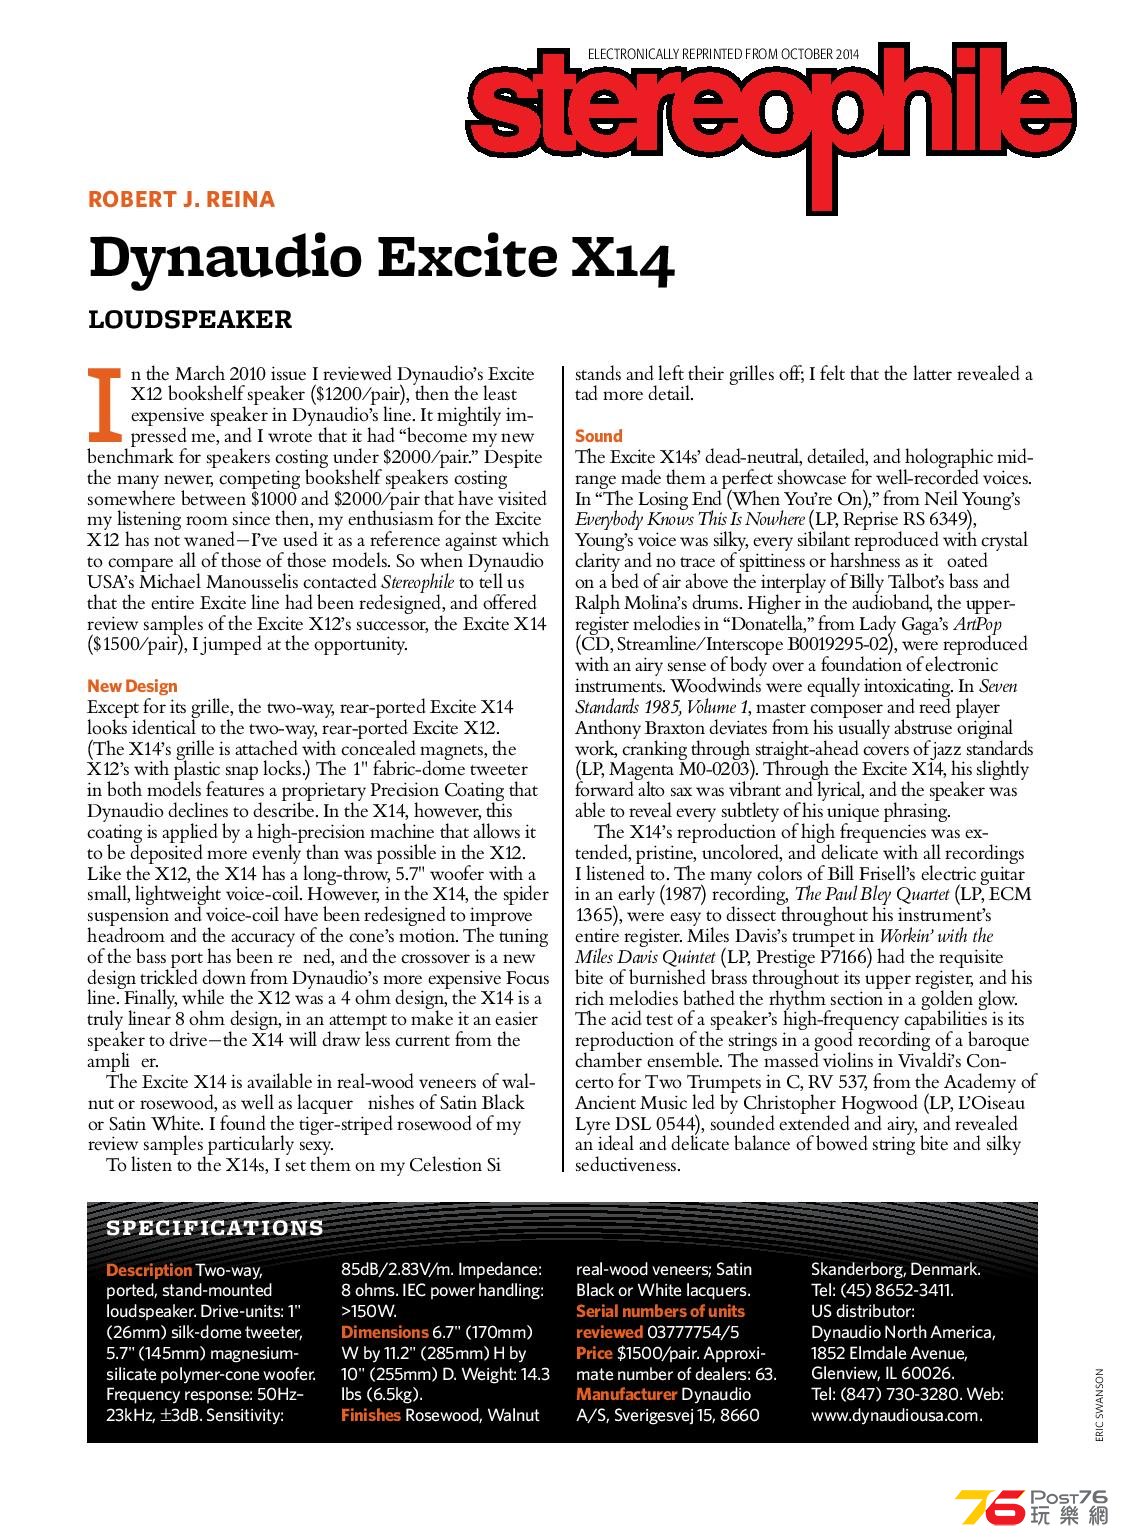 Dynaudio-Excite-X14_85320_1-page-002.jpg